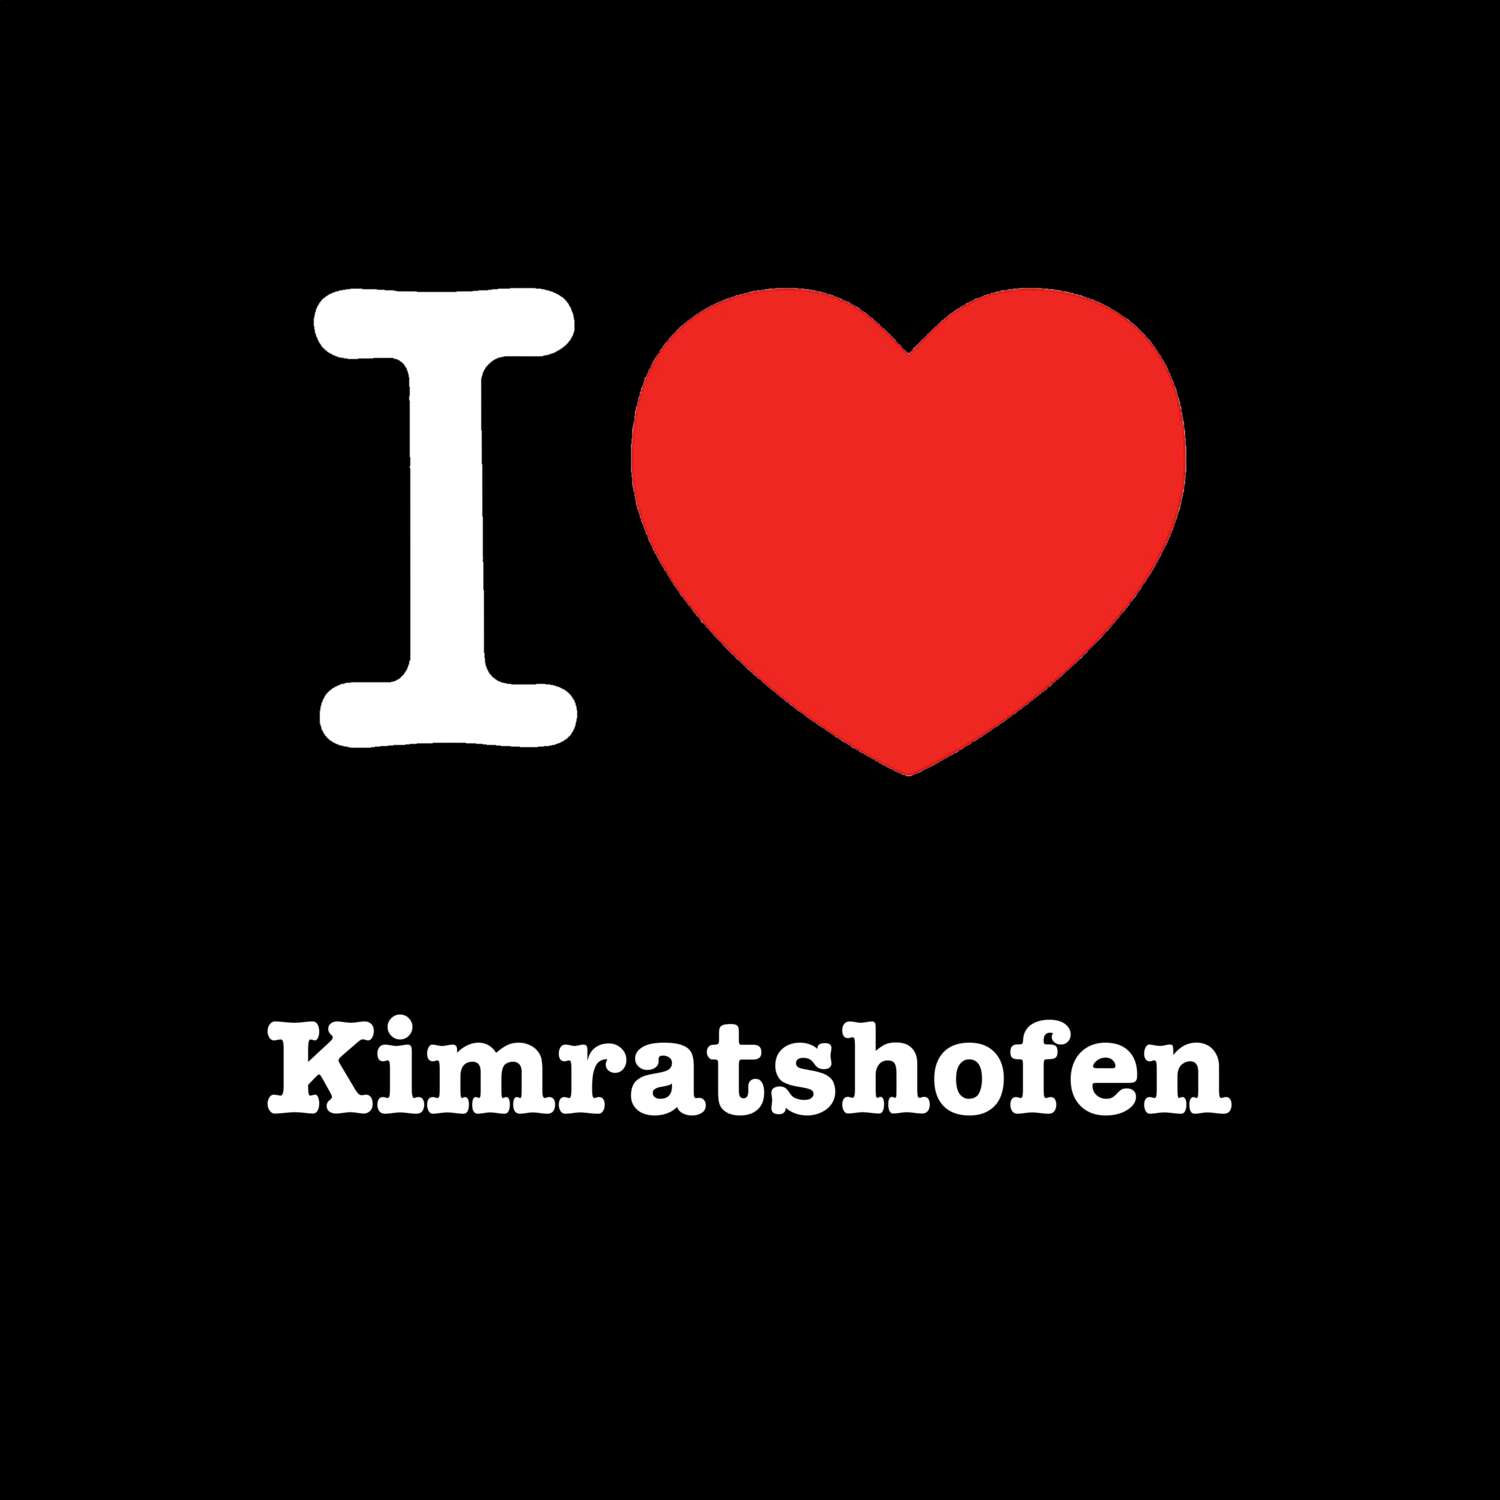 Kimratshofen T-Shirt »I love«